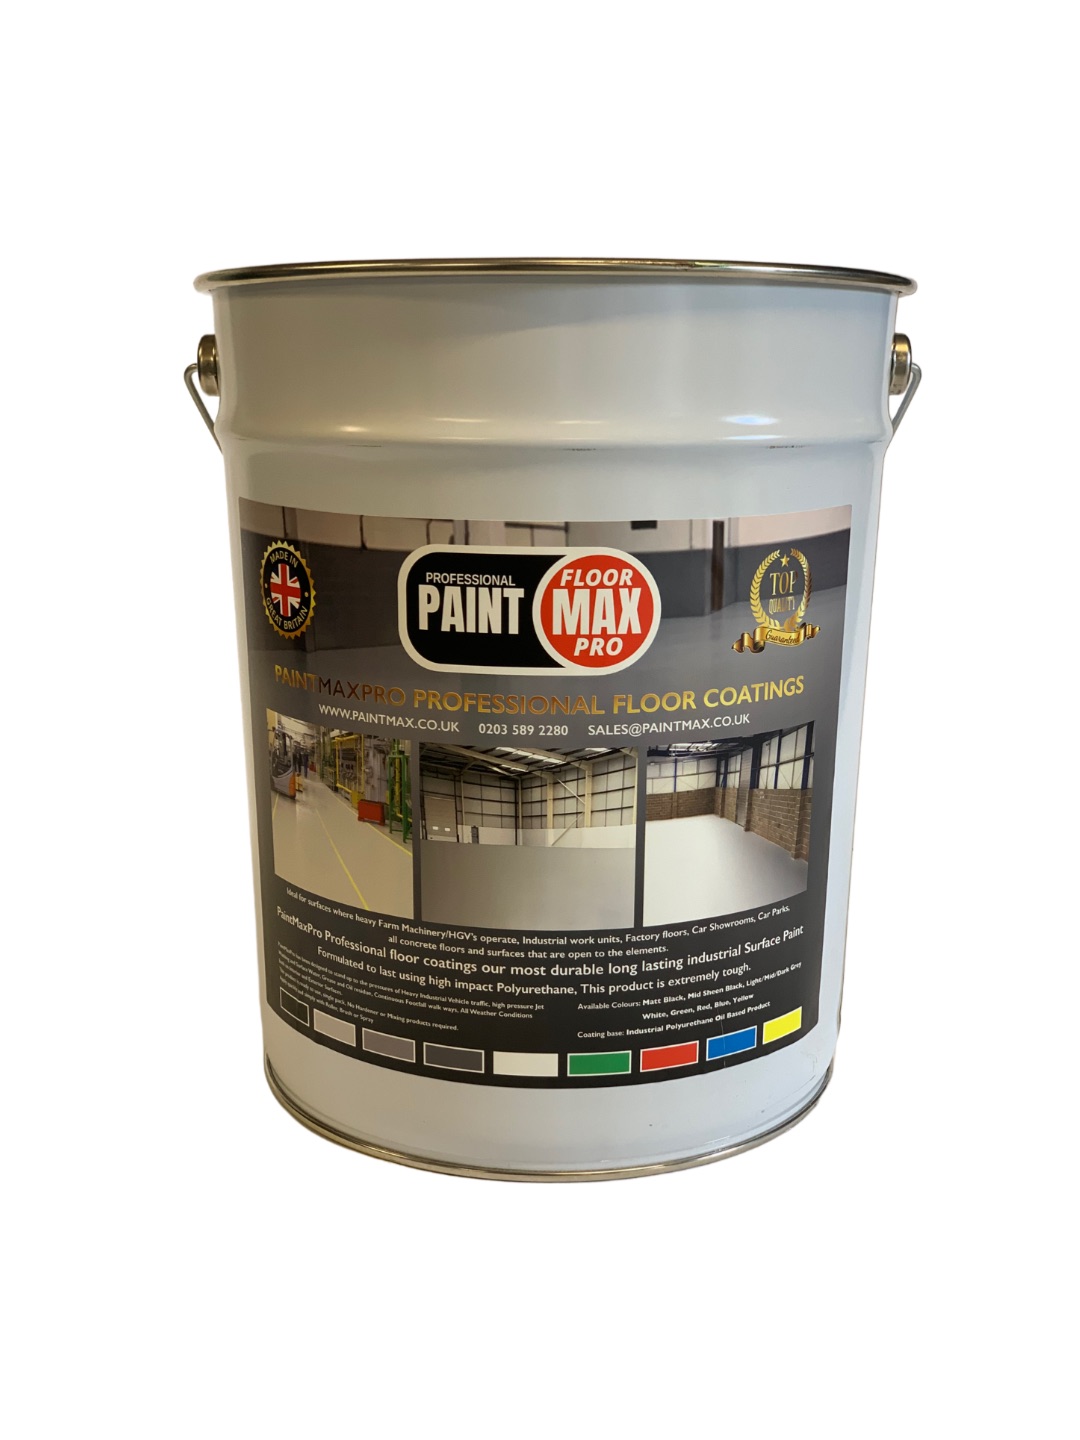 Traffic Red Ral3020 Professional PU350 Polyurethane Floor Paint